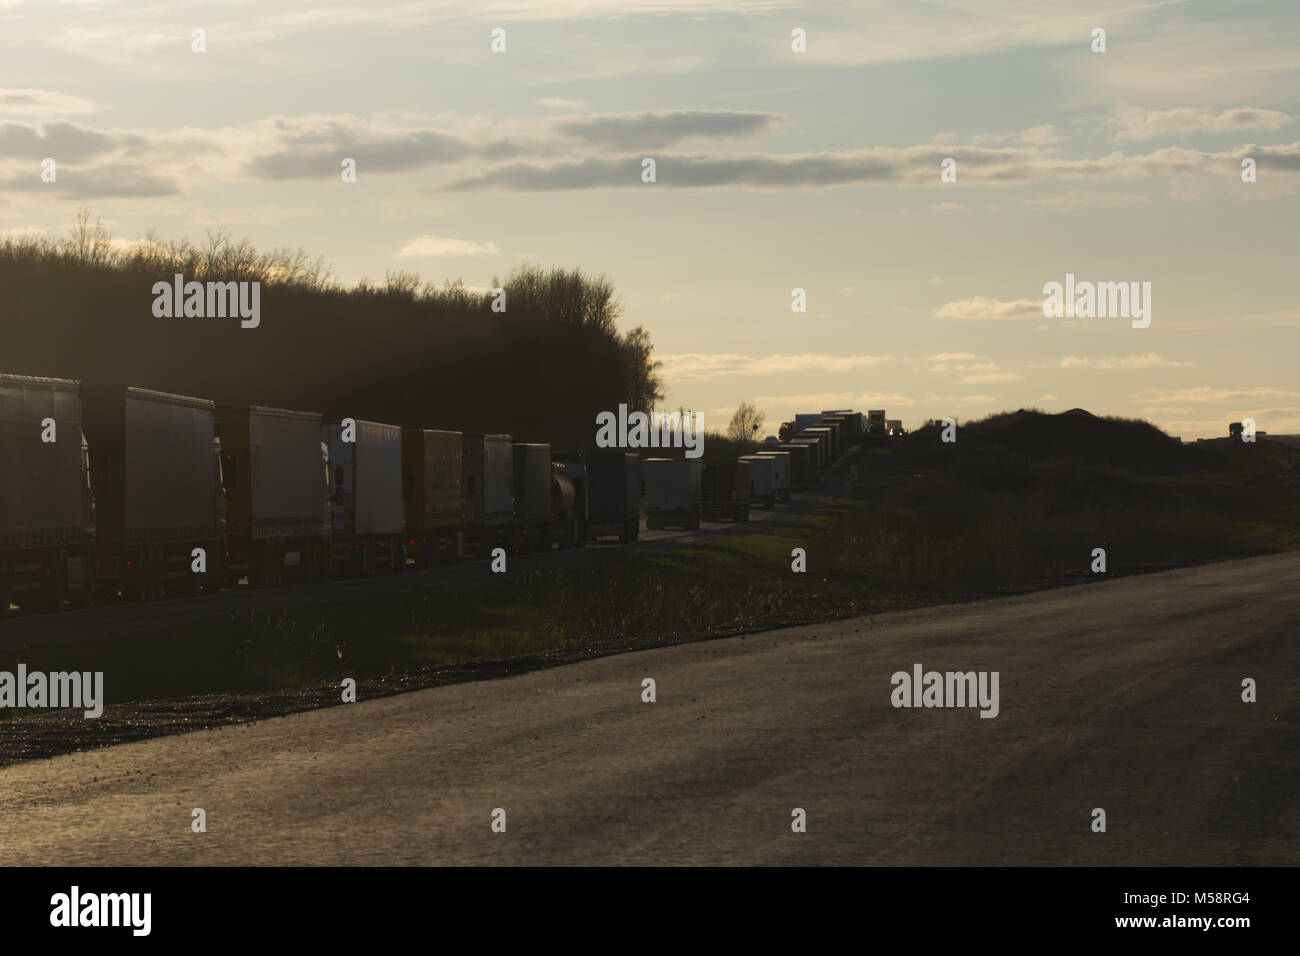 Traffic Jam of Heavy Trucks at Sunset - wide angle Stock Photo